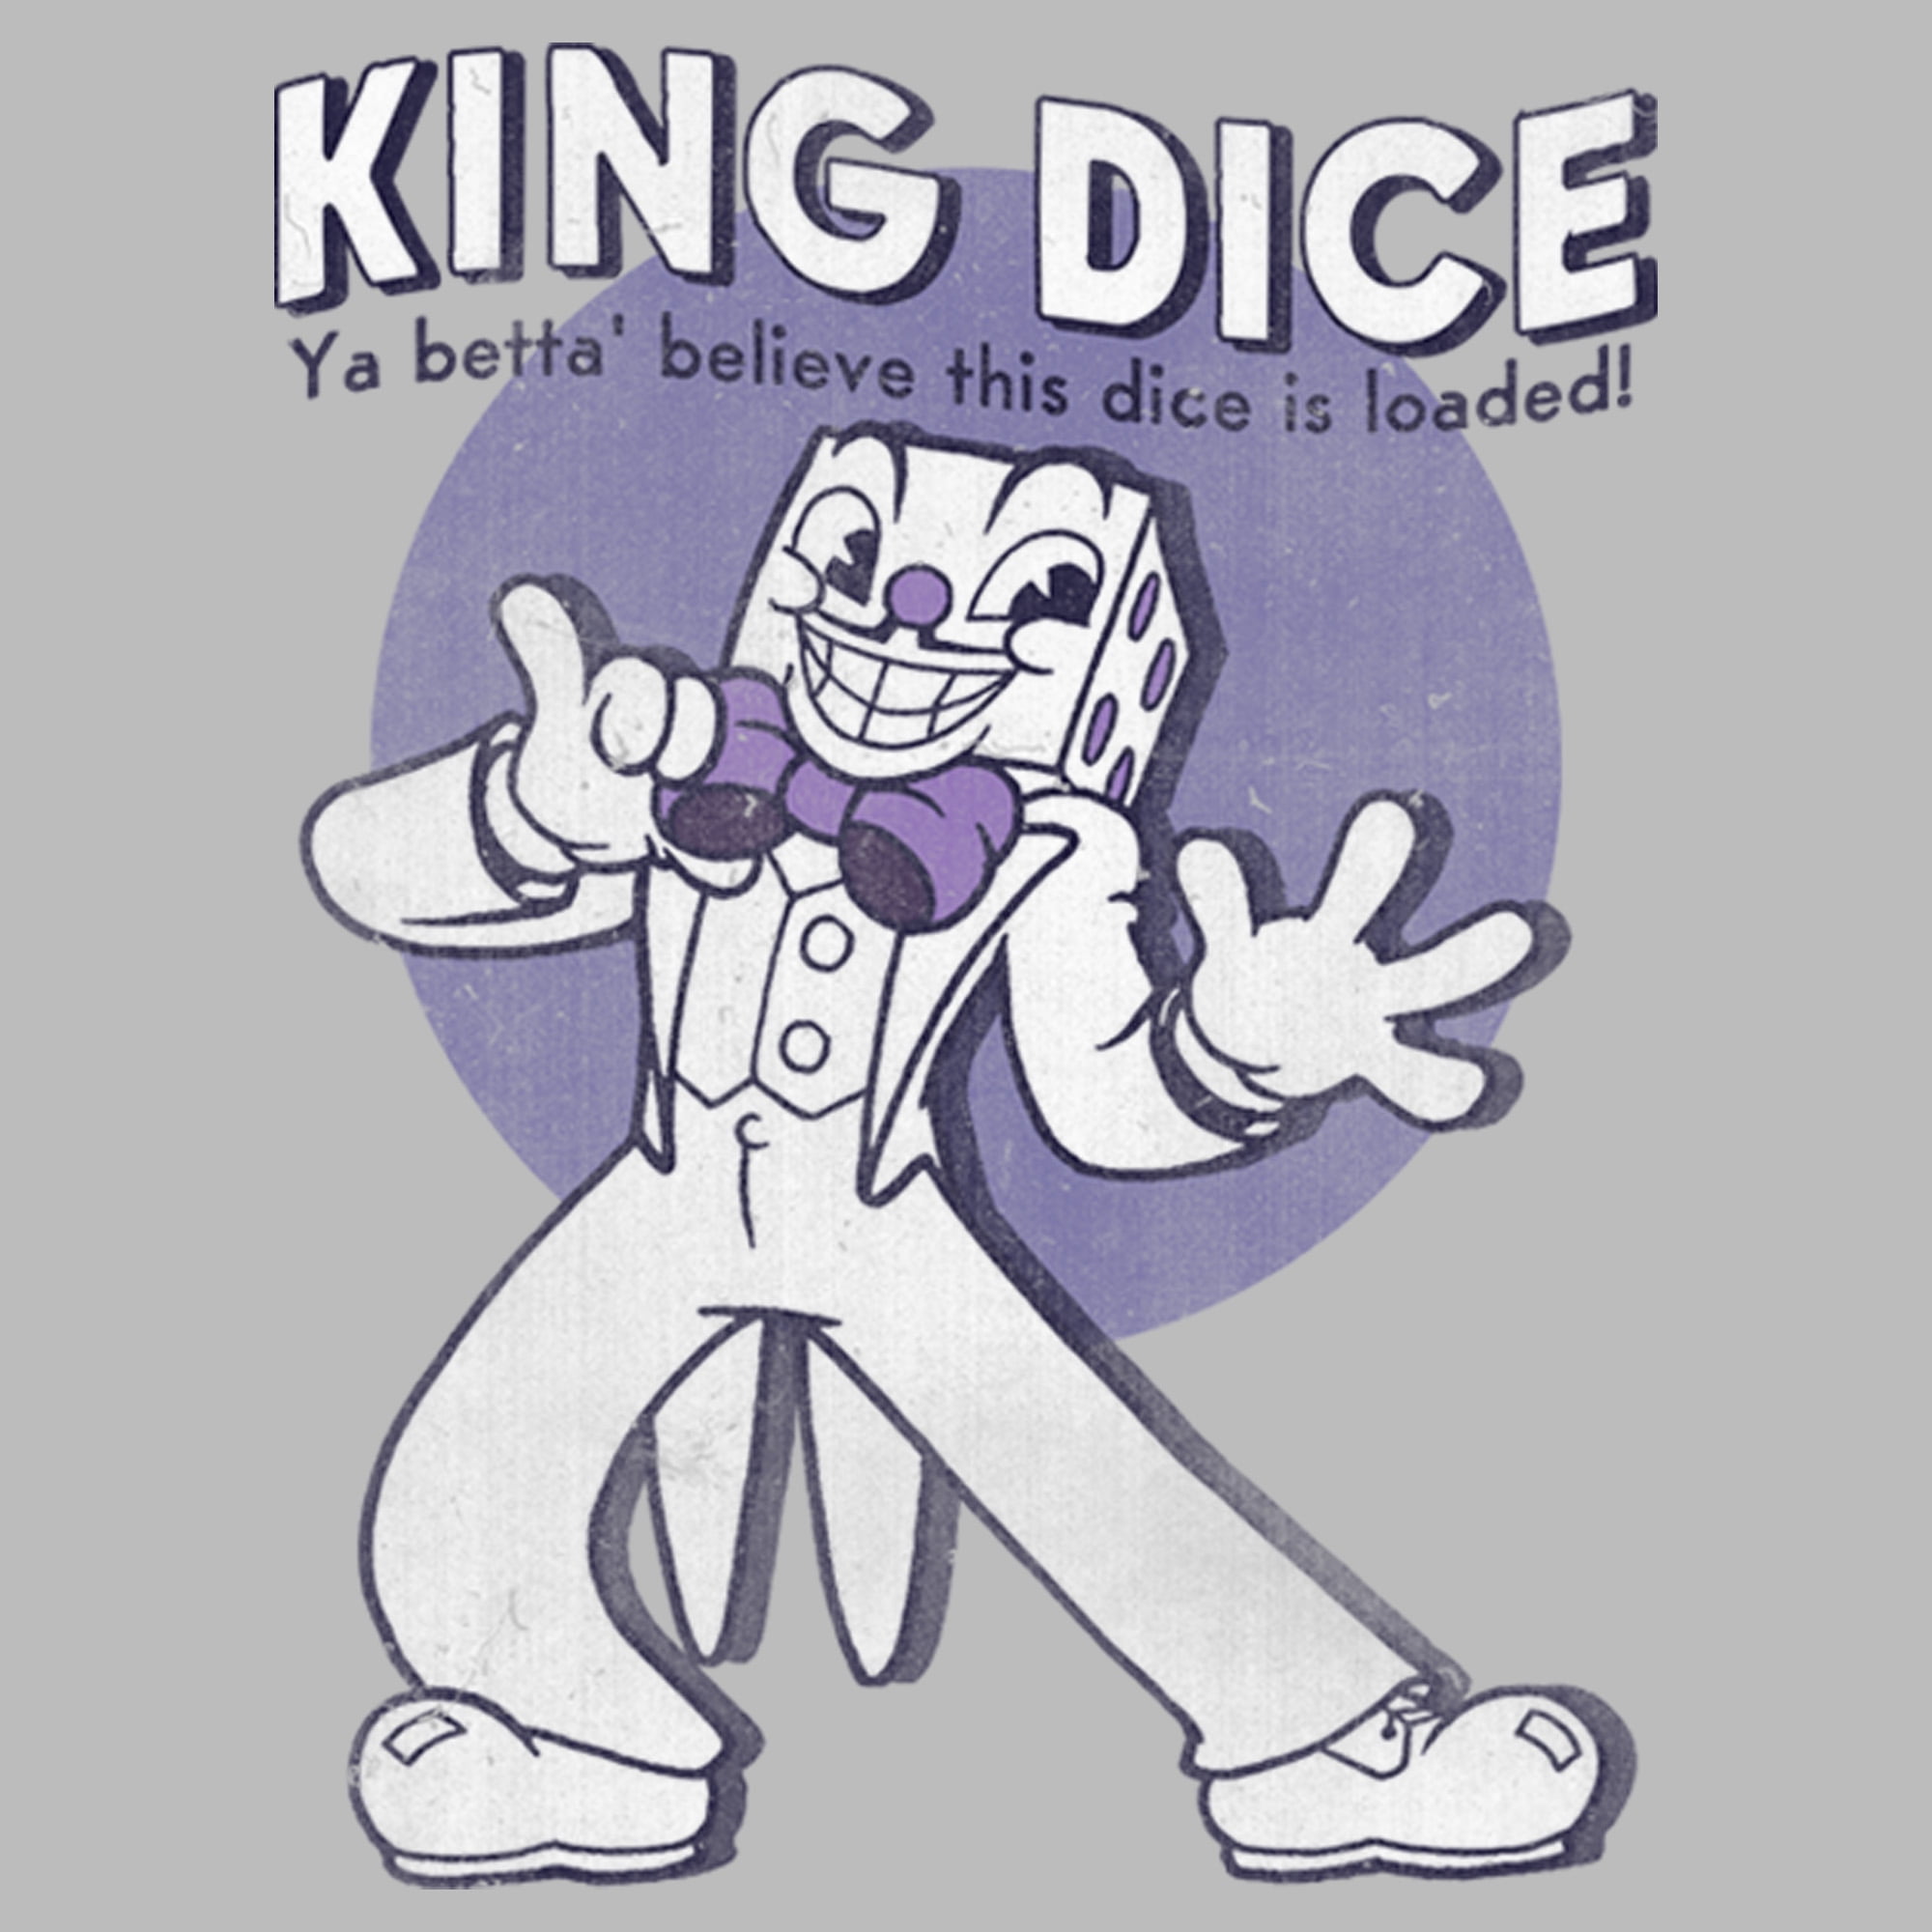 King dice exposed, is he even a true die?